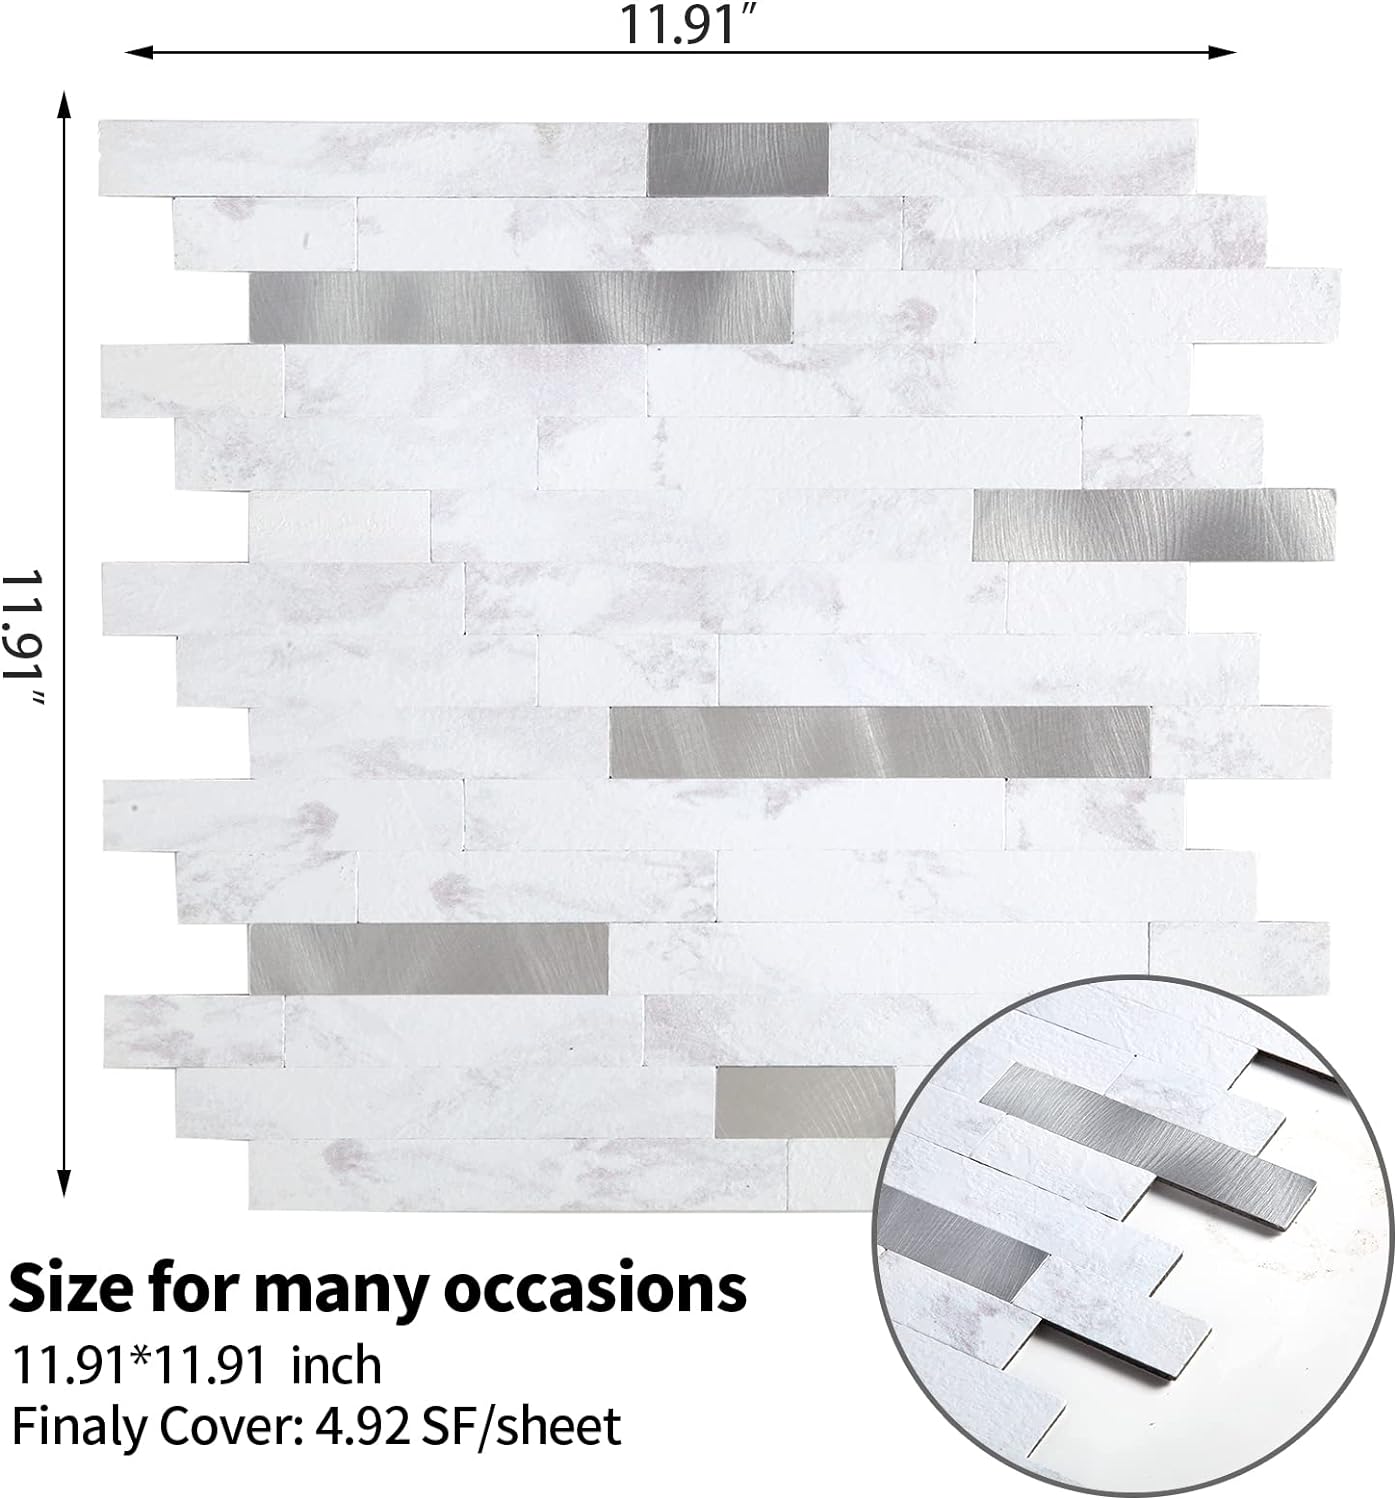 PVC backsplash tile size image Linear Blend in Kara White Stone